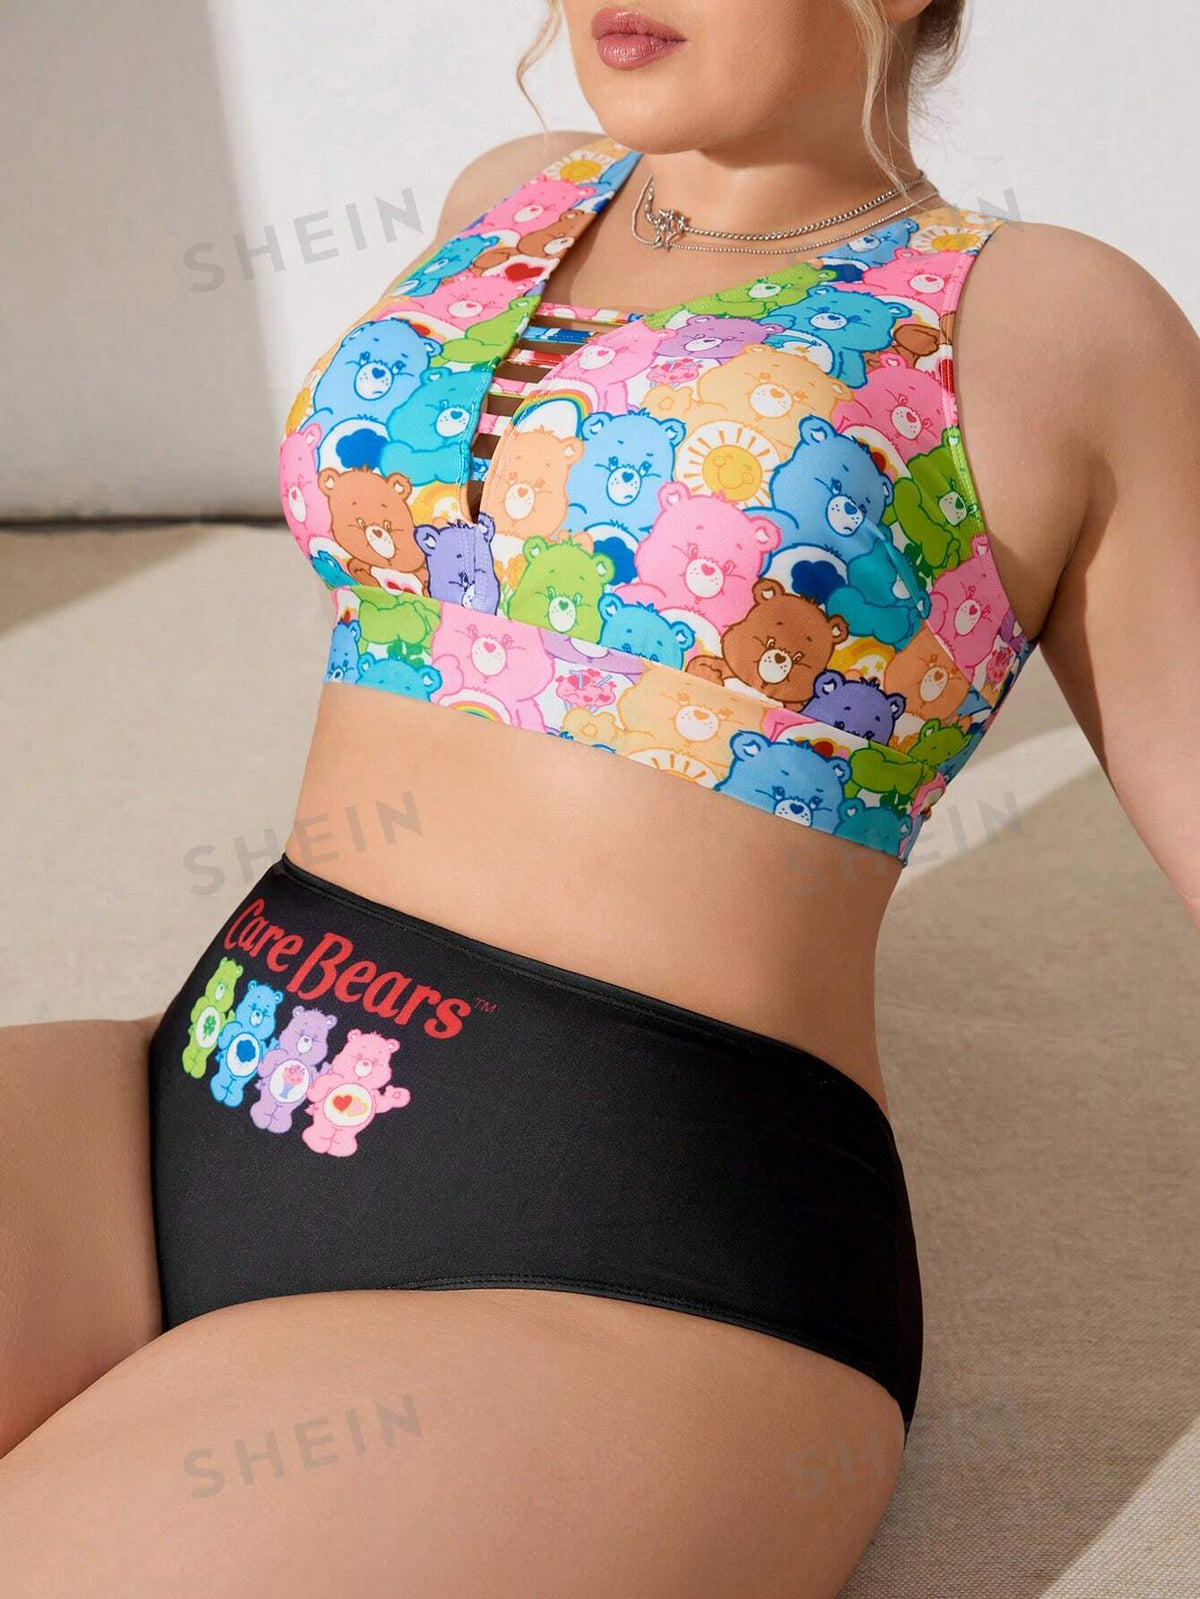 X Care Bears Plus Size Women Knitted Casual Cute Cartoon Print Two-Piece Bikini Set, Vacation Swimsuit